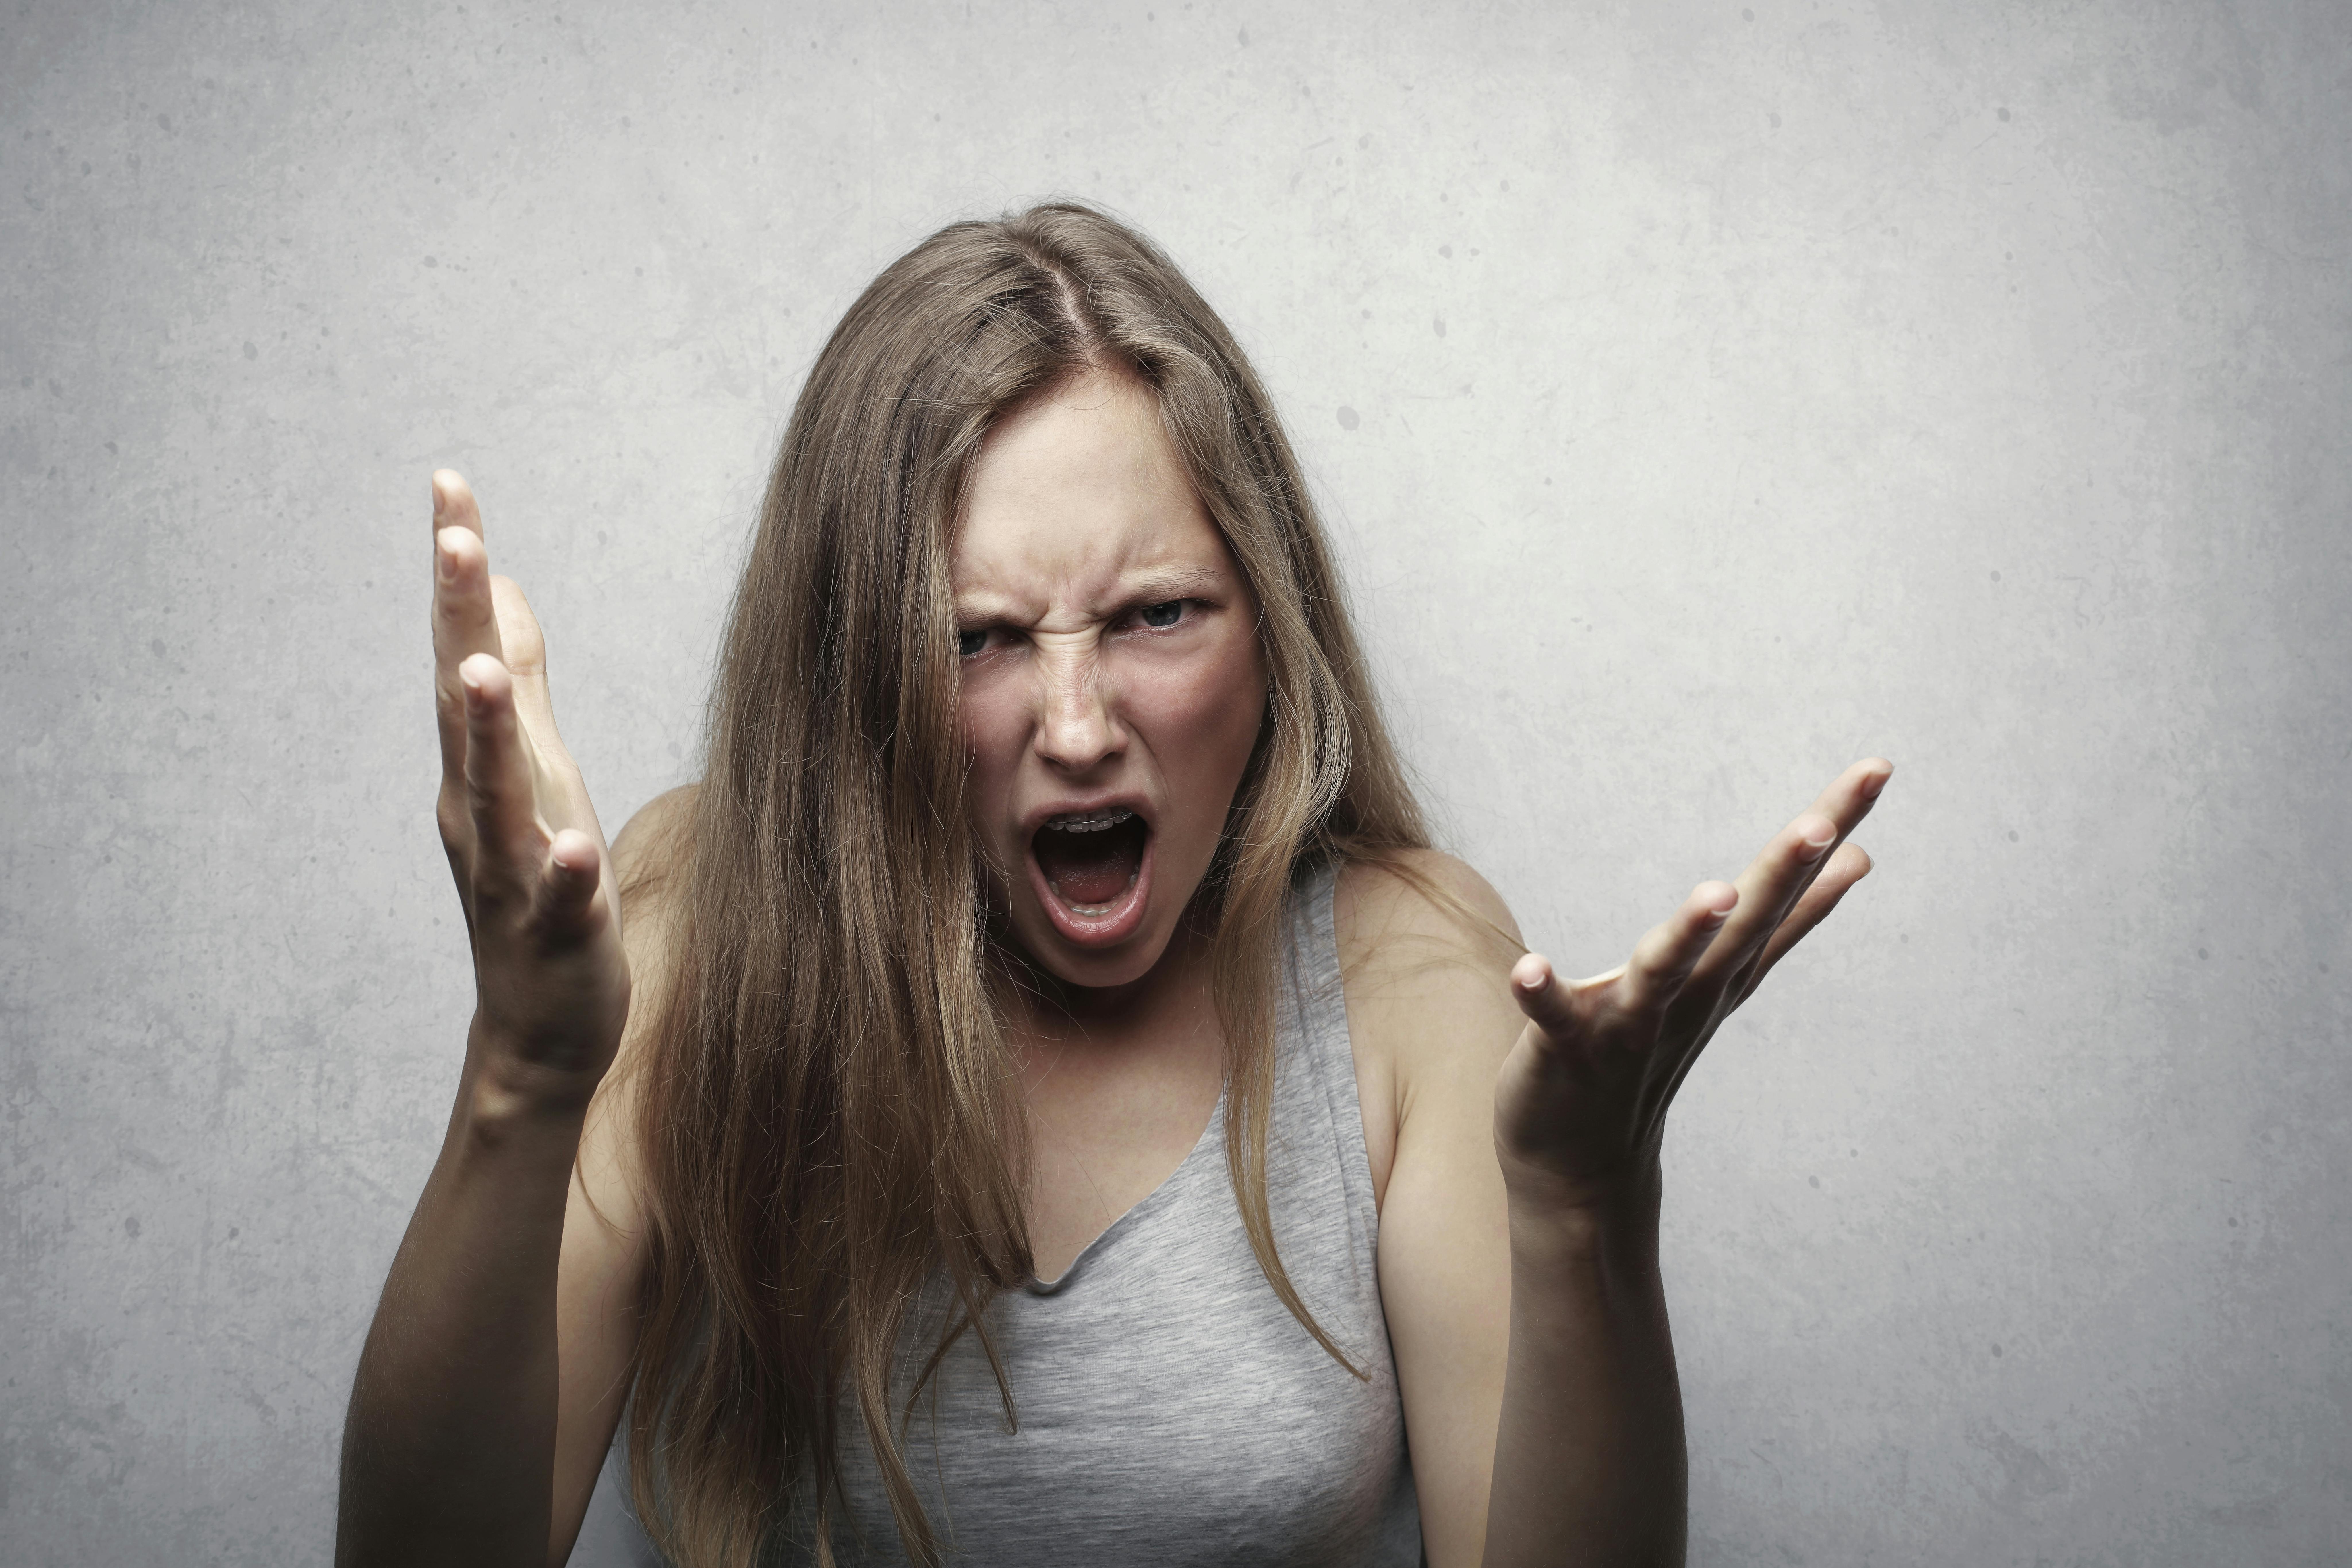 An upset woman screaming | Source: Pexels